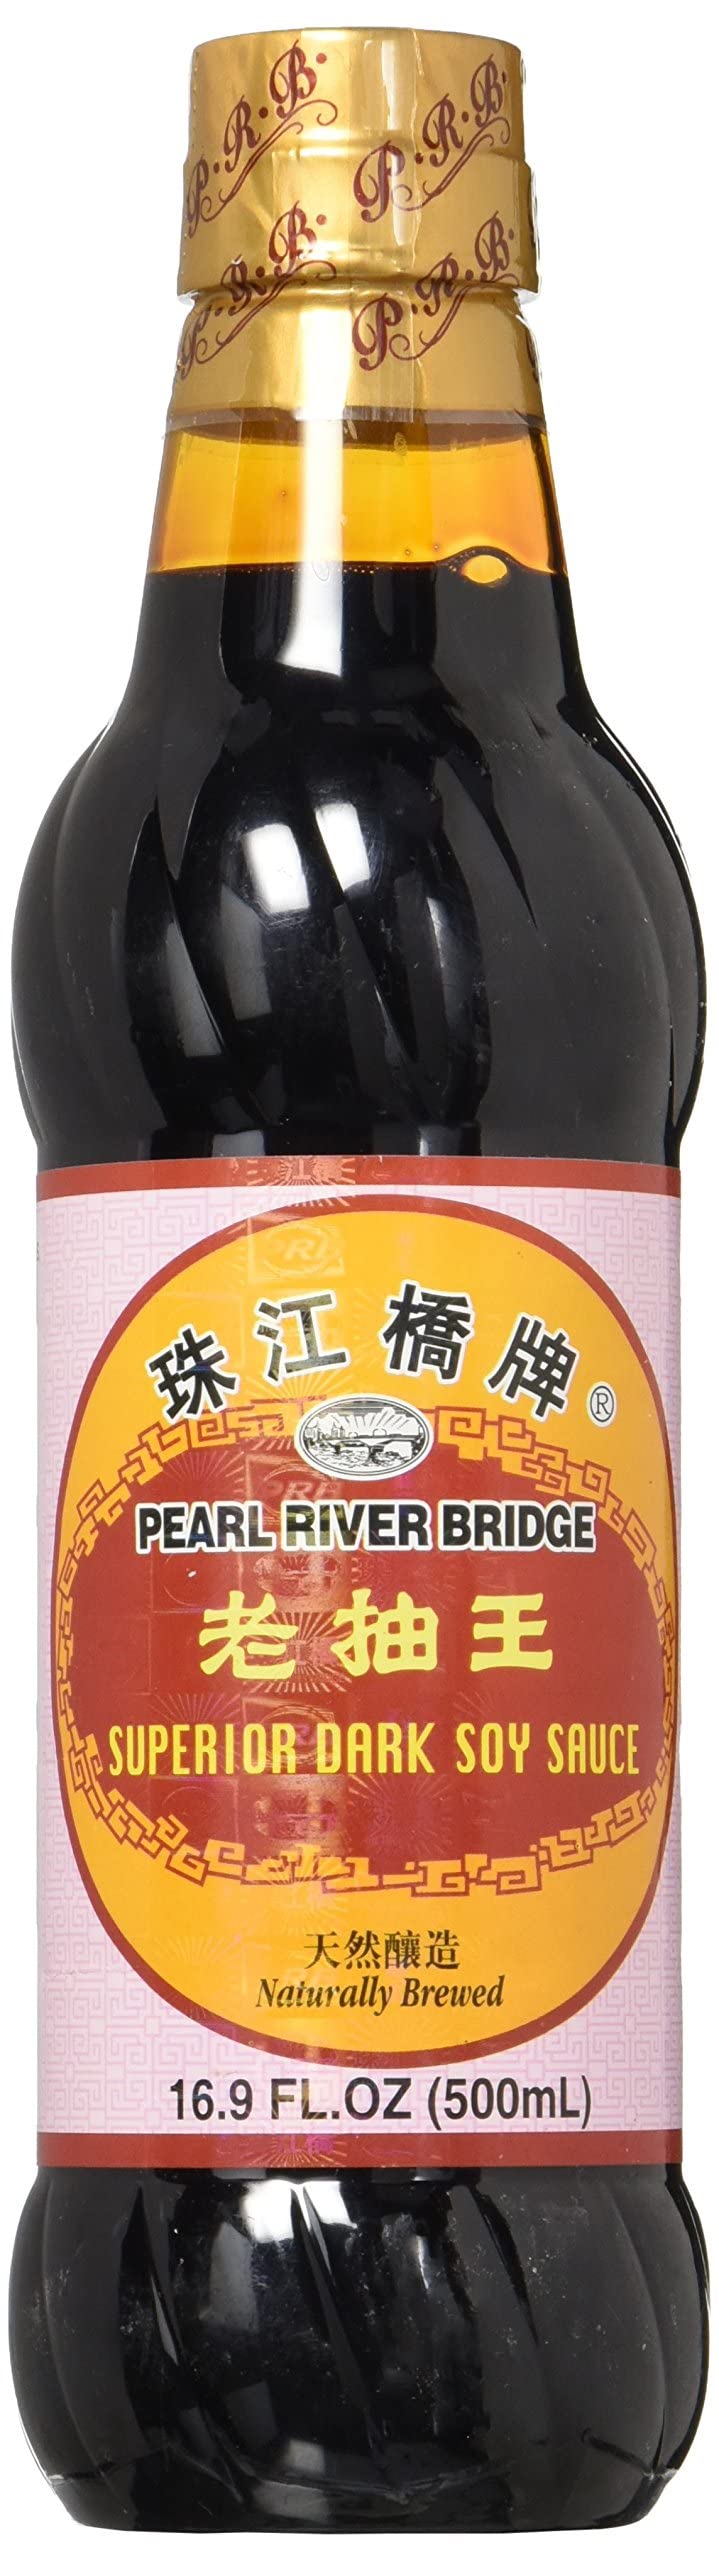 Pearl River Bridge Soy Sauce